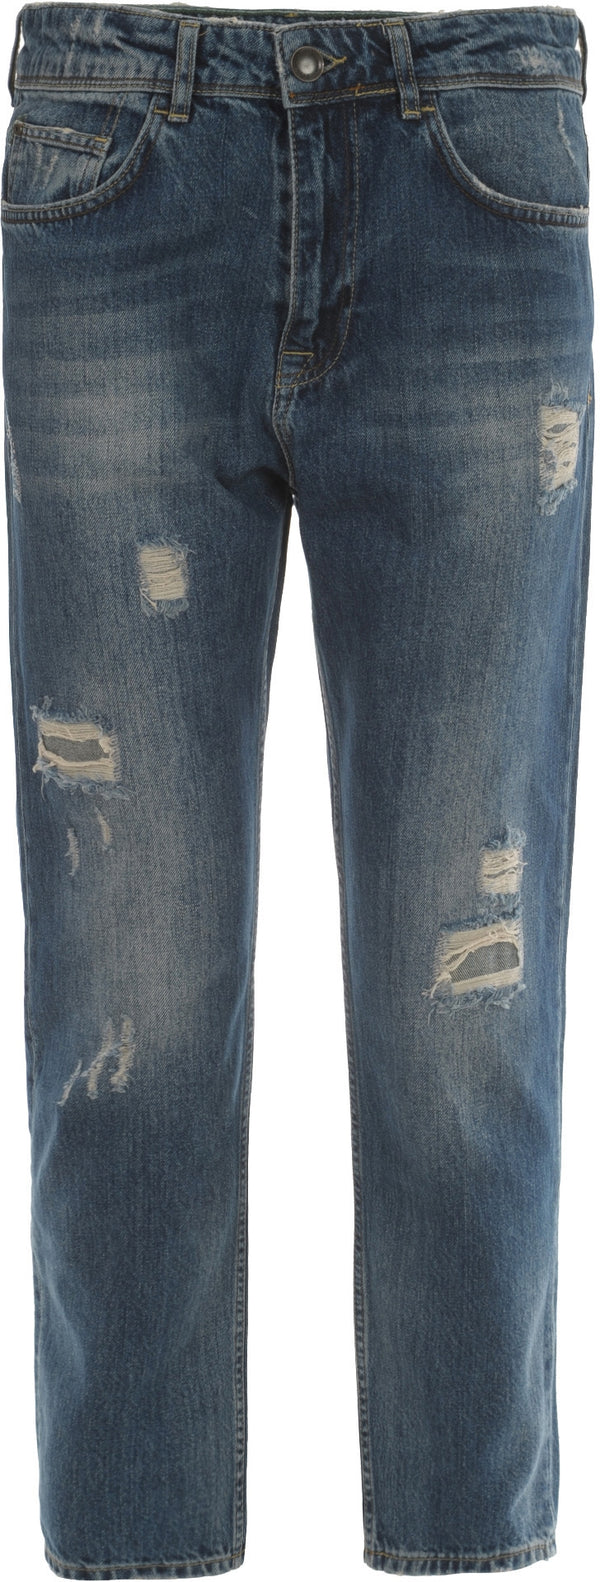 P.Grax pantaloni jeans Blacksmith Cropped Fit blue